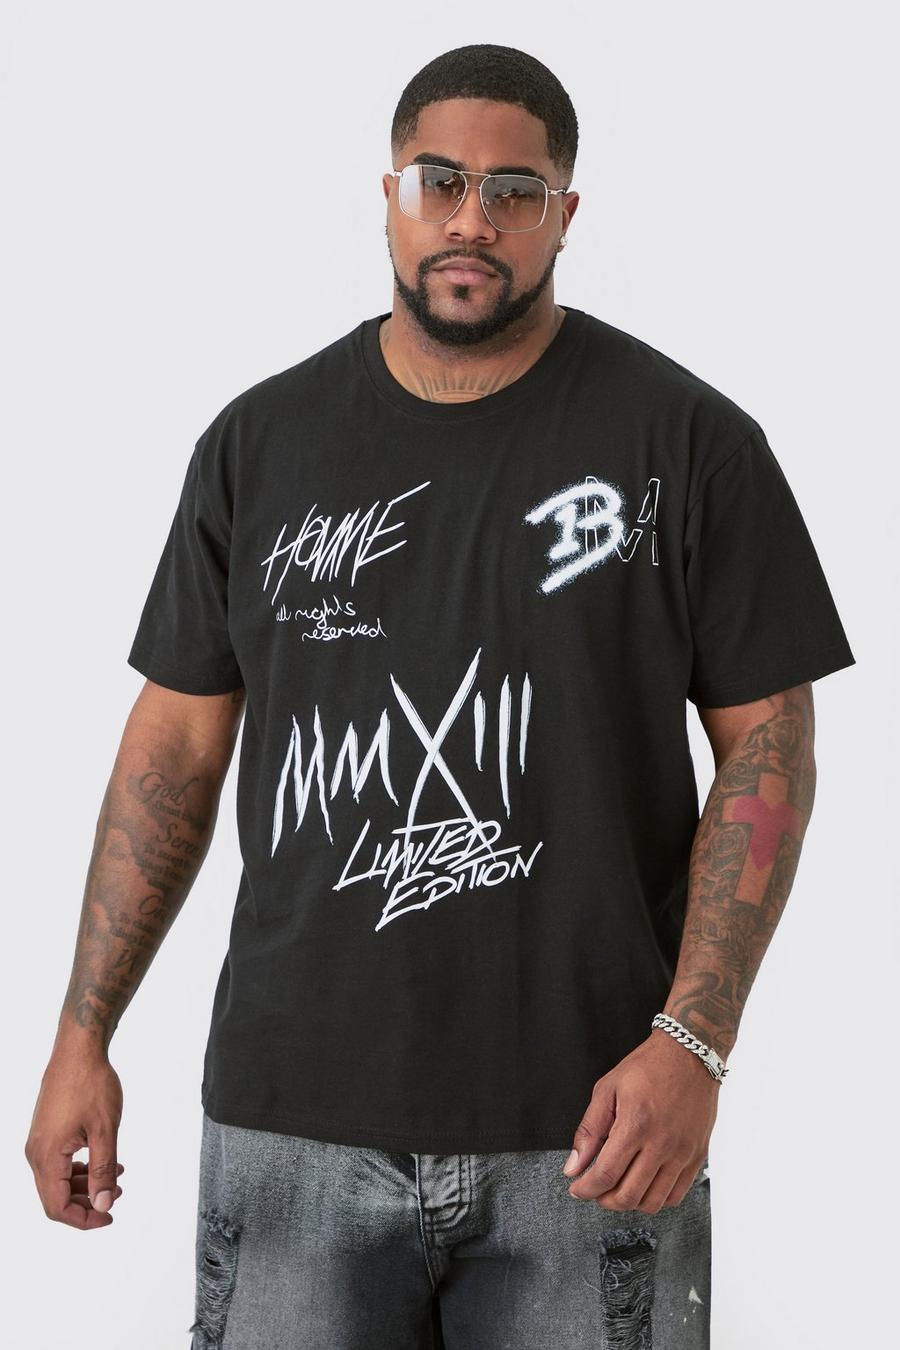 Plus schwarzes T-Shirt mit Graffiti-Print, Black